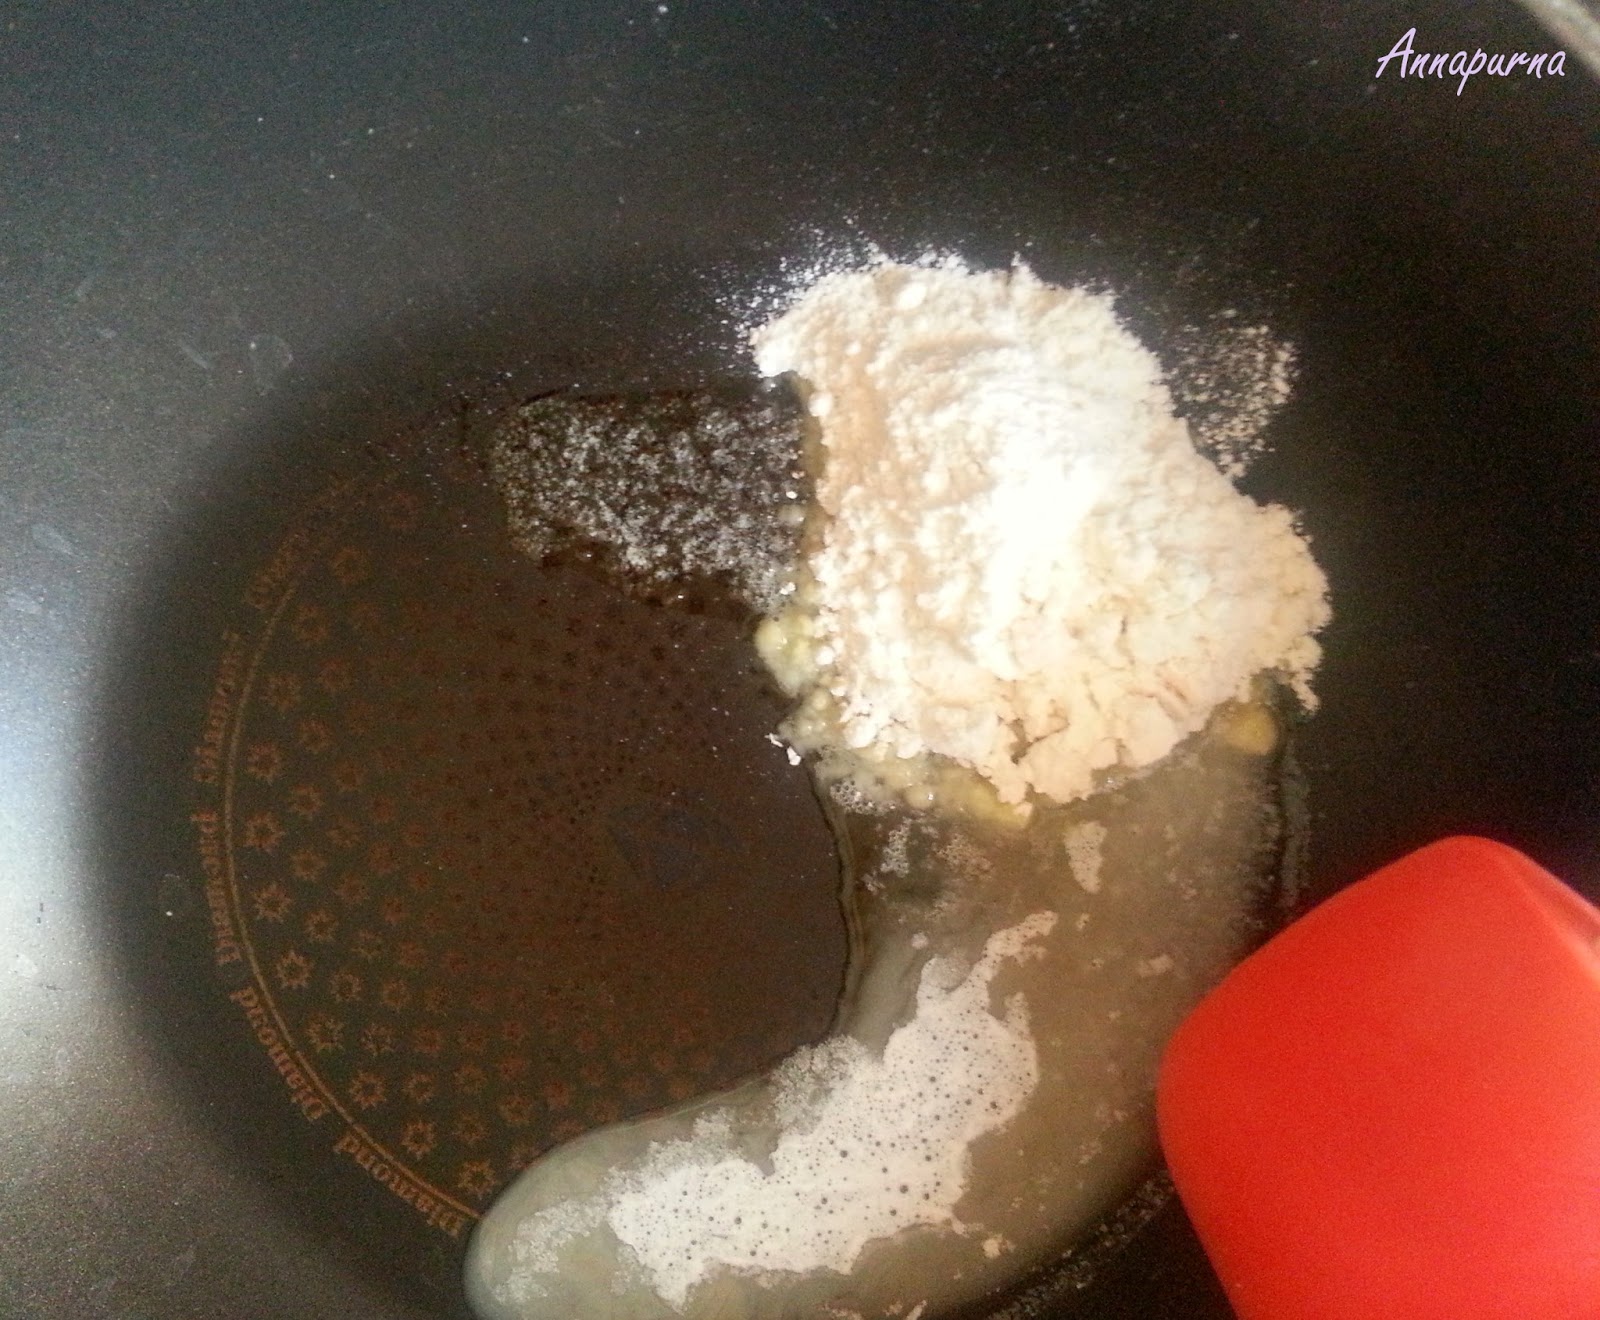 Annapurna: Penne Pasta In Creamy White Sauce / Easy Veg Pasta in White ...